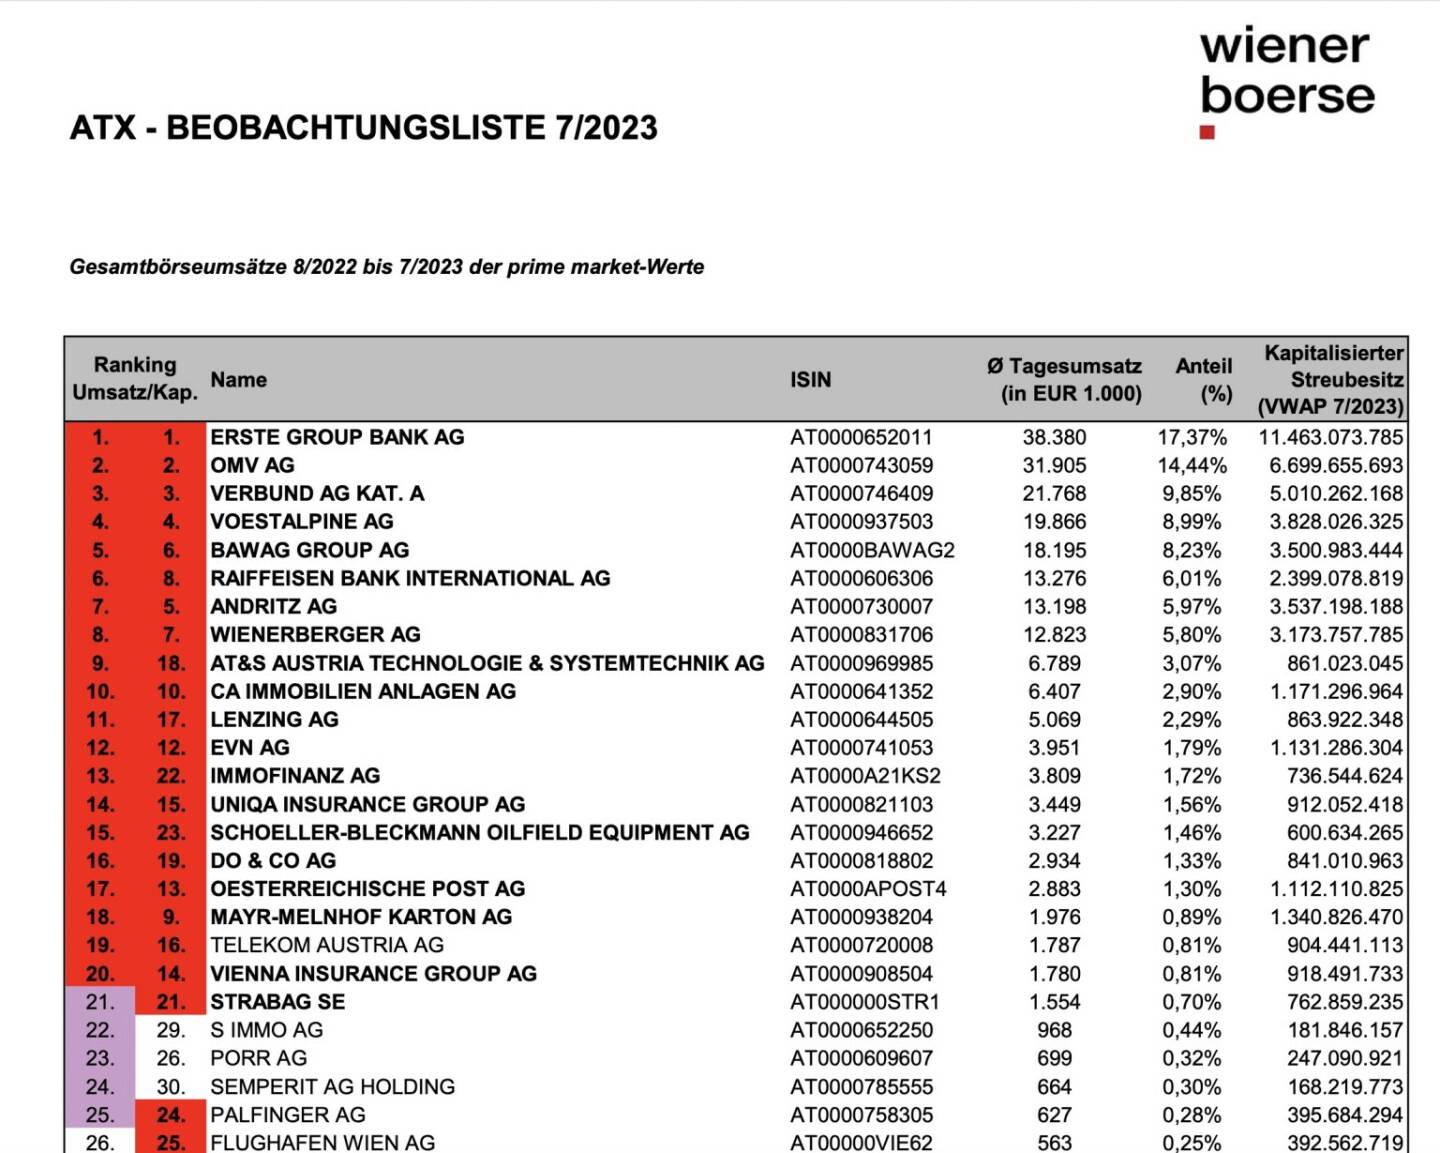 ATX-Beobachtungsliste 07/2023 (c) Wiener Börse